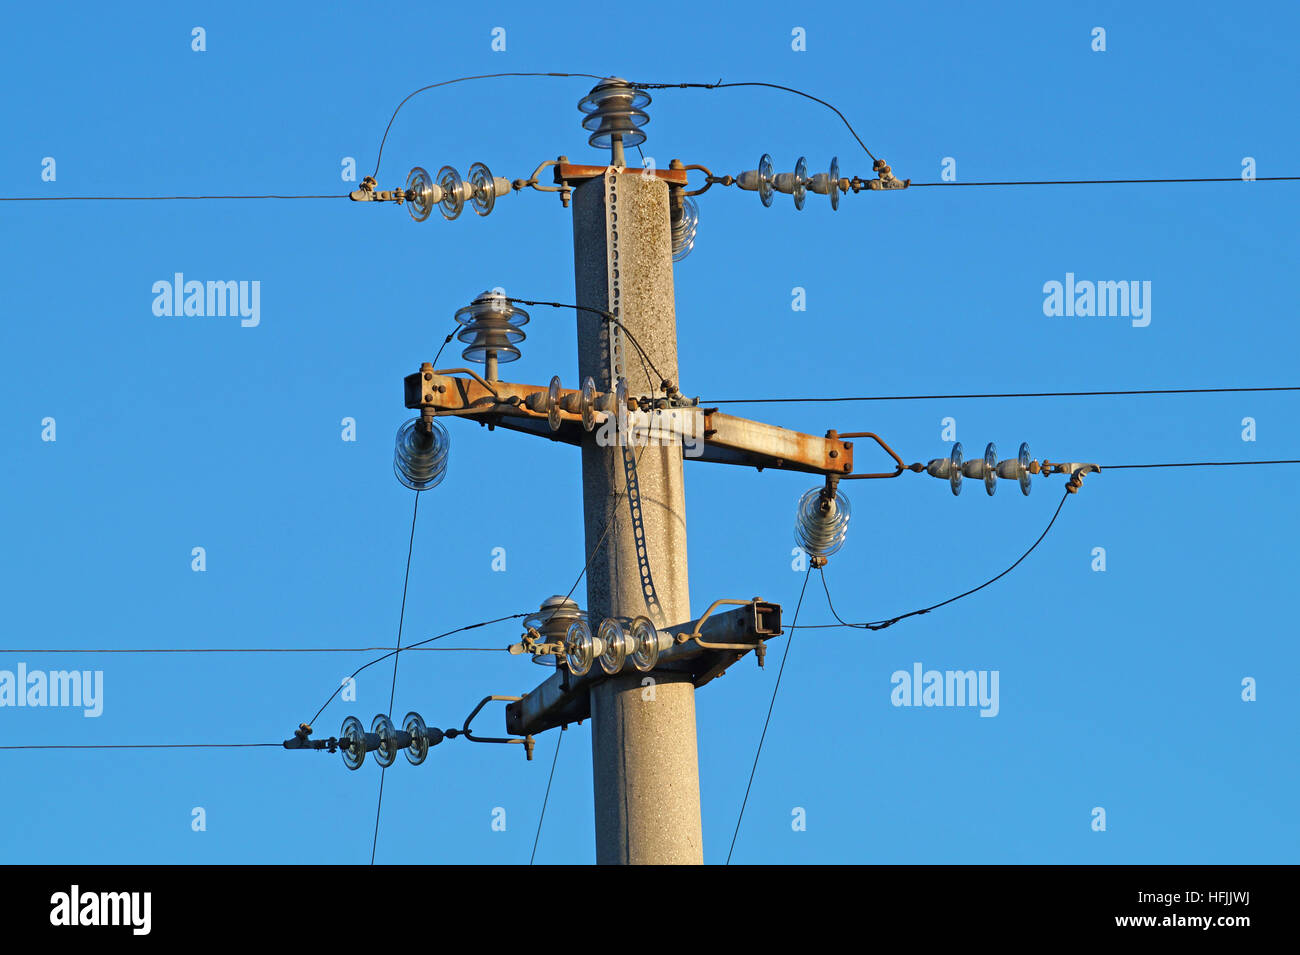 Power line against the blue sky Stock Photo